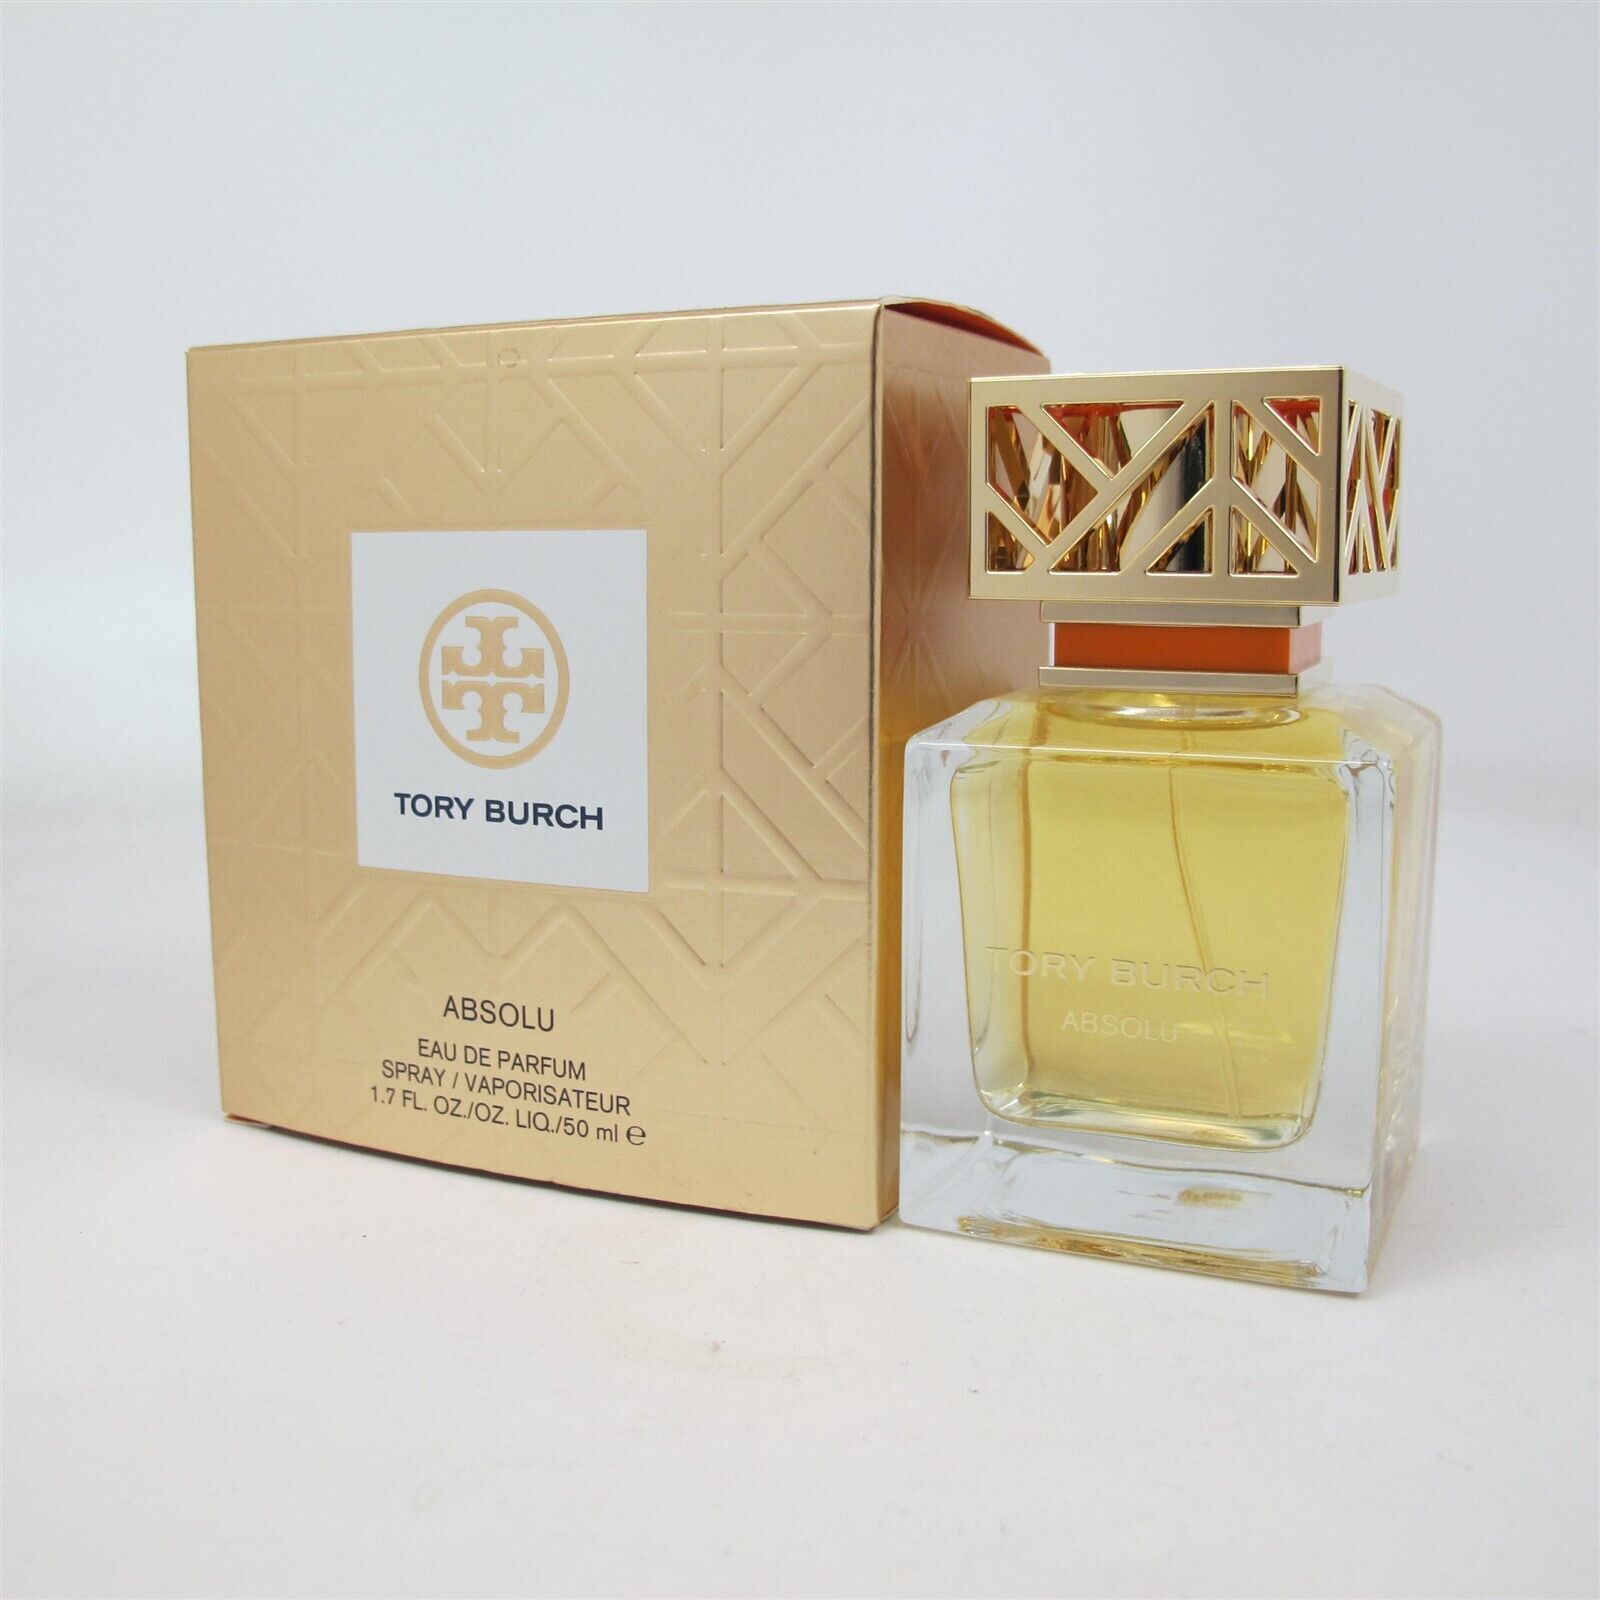 Tory Burch ABSOLU 50 ml/ 1.7 oz Eau de Parfum Spray *Open Box* - $138.59